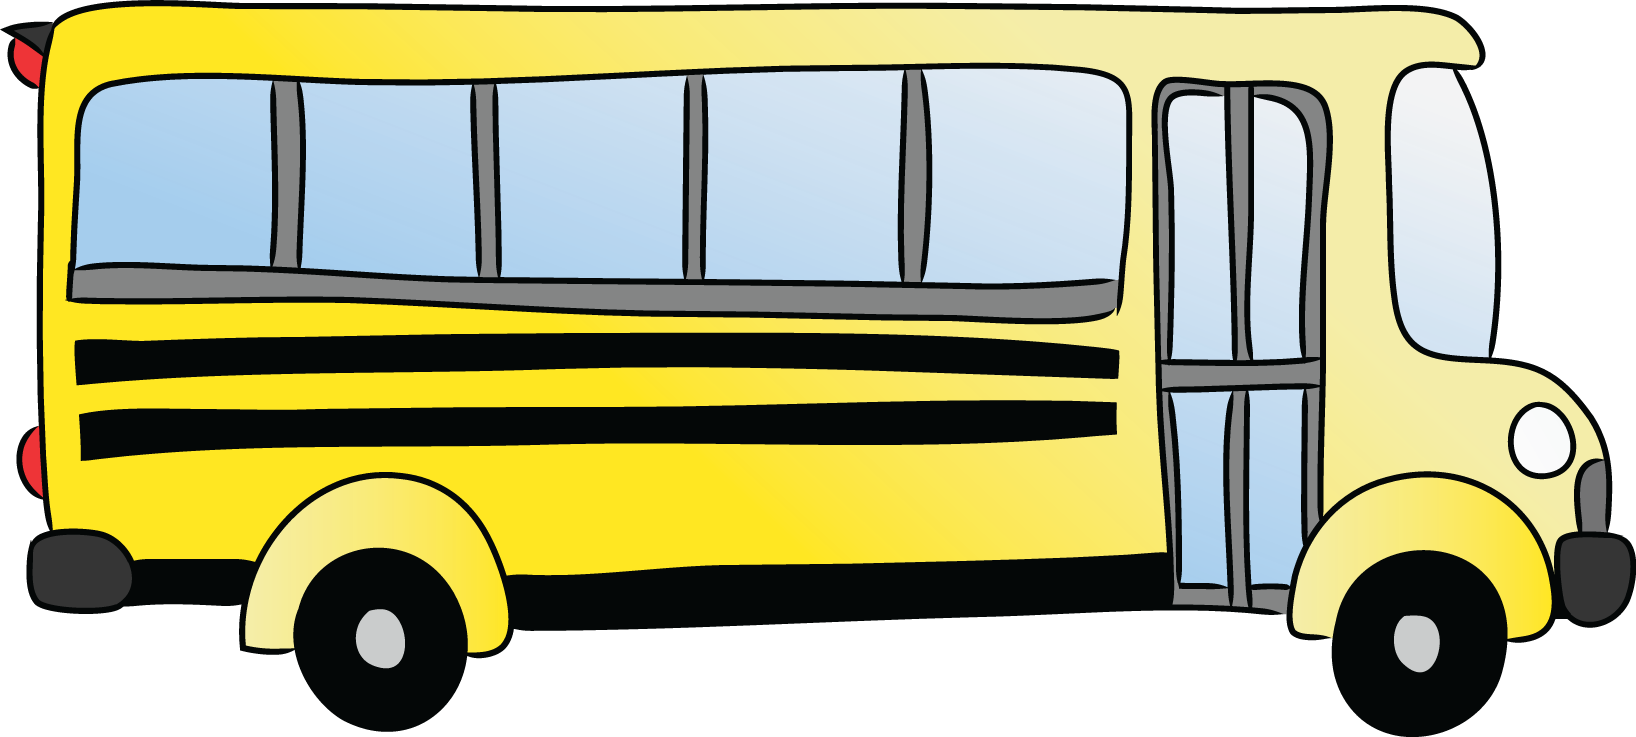 Cartoon School Bus Clip Art